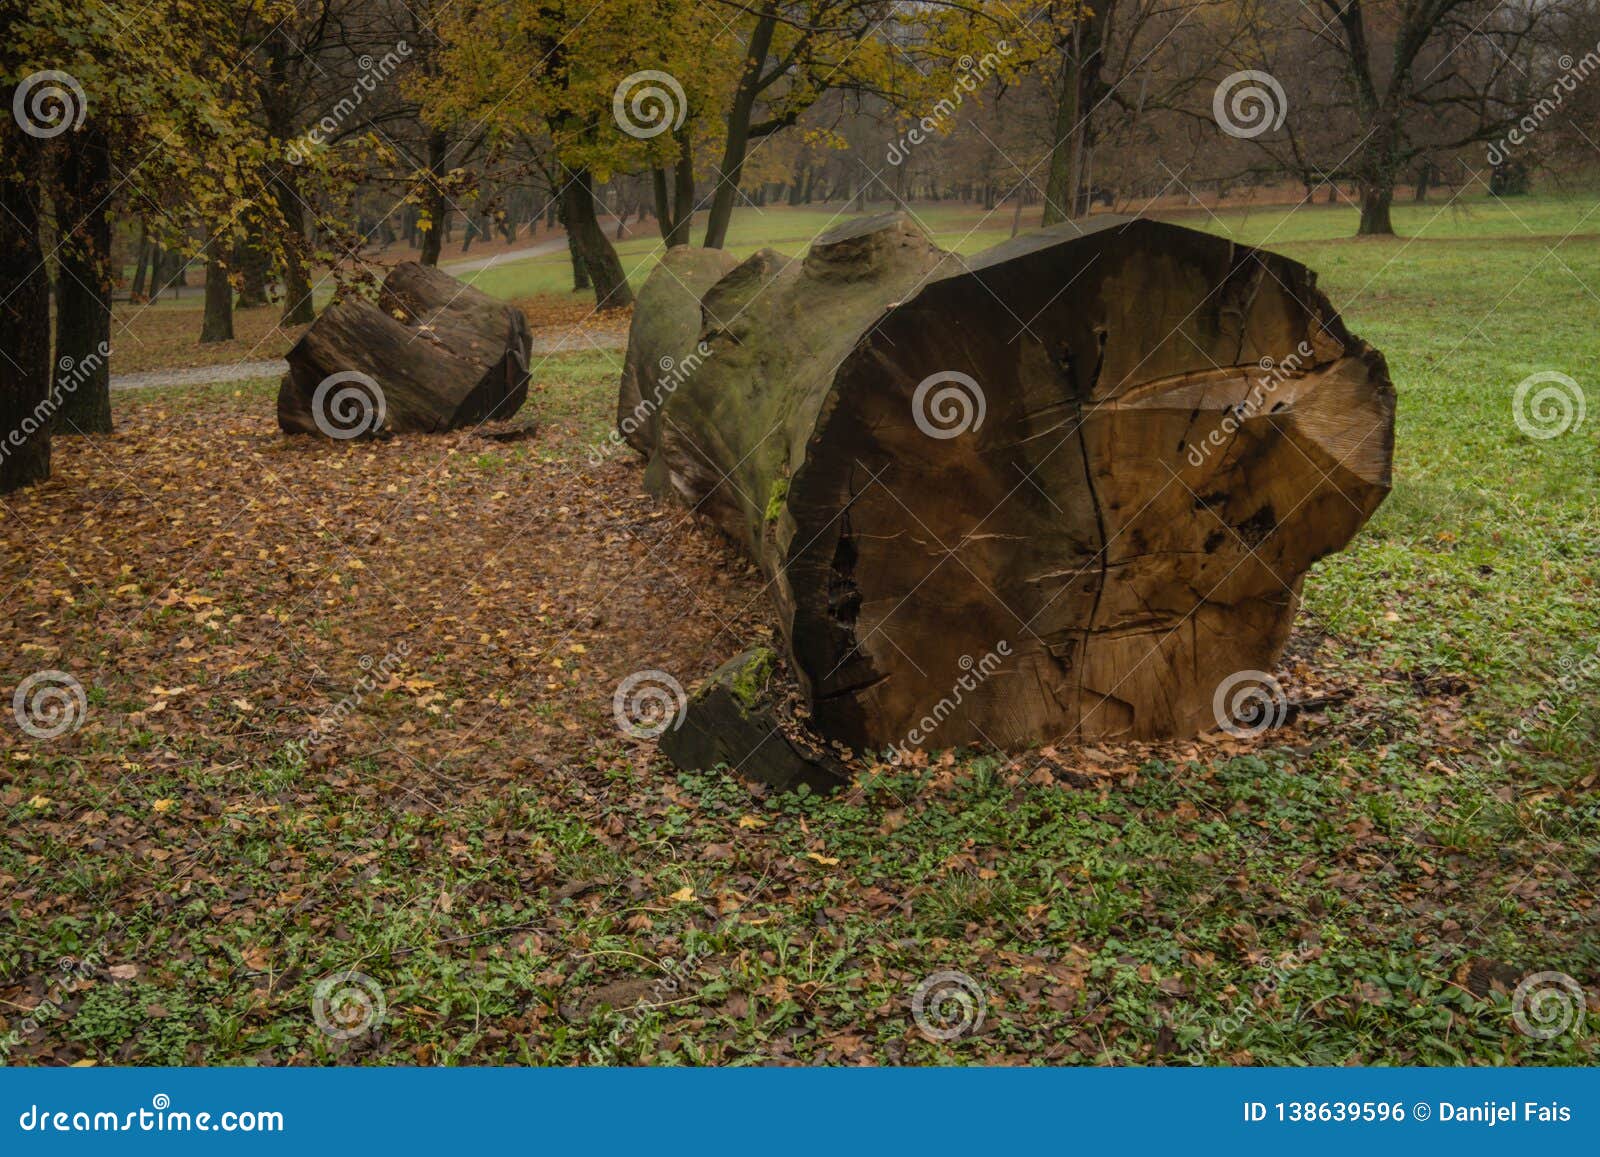 cutting trees park approval oak